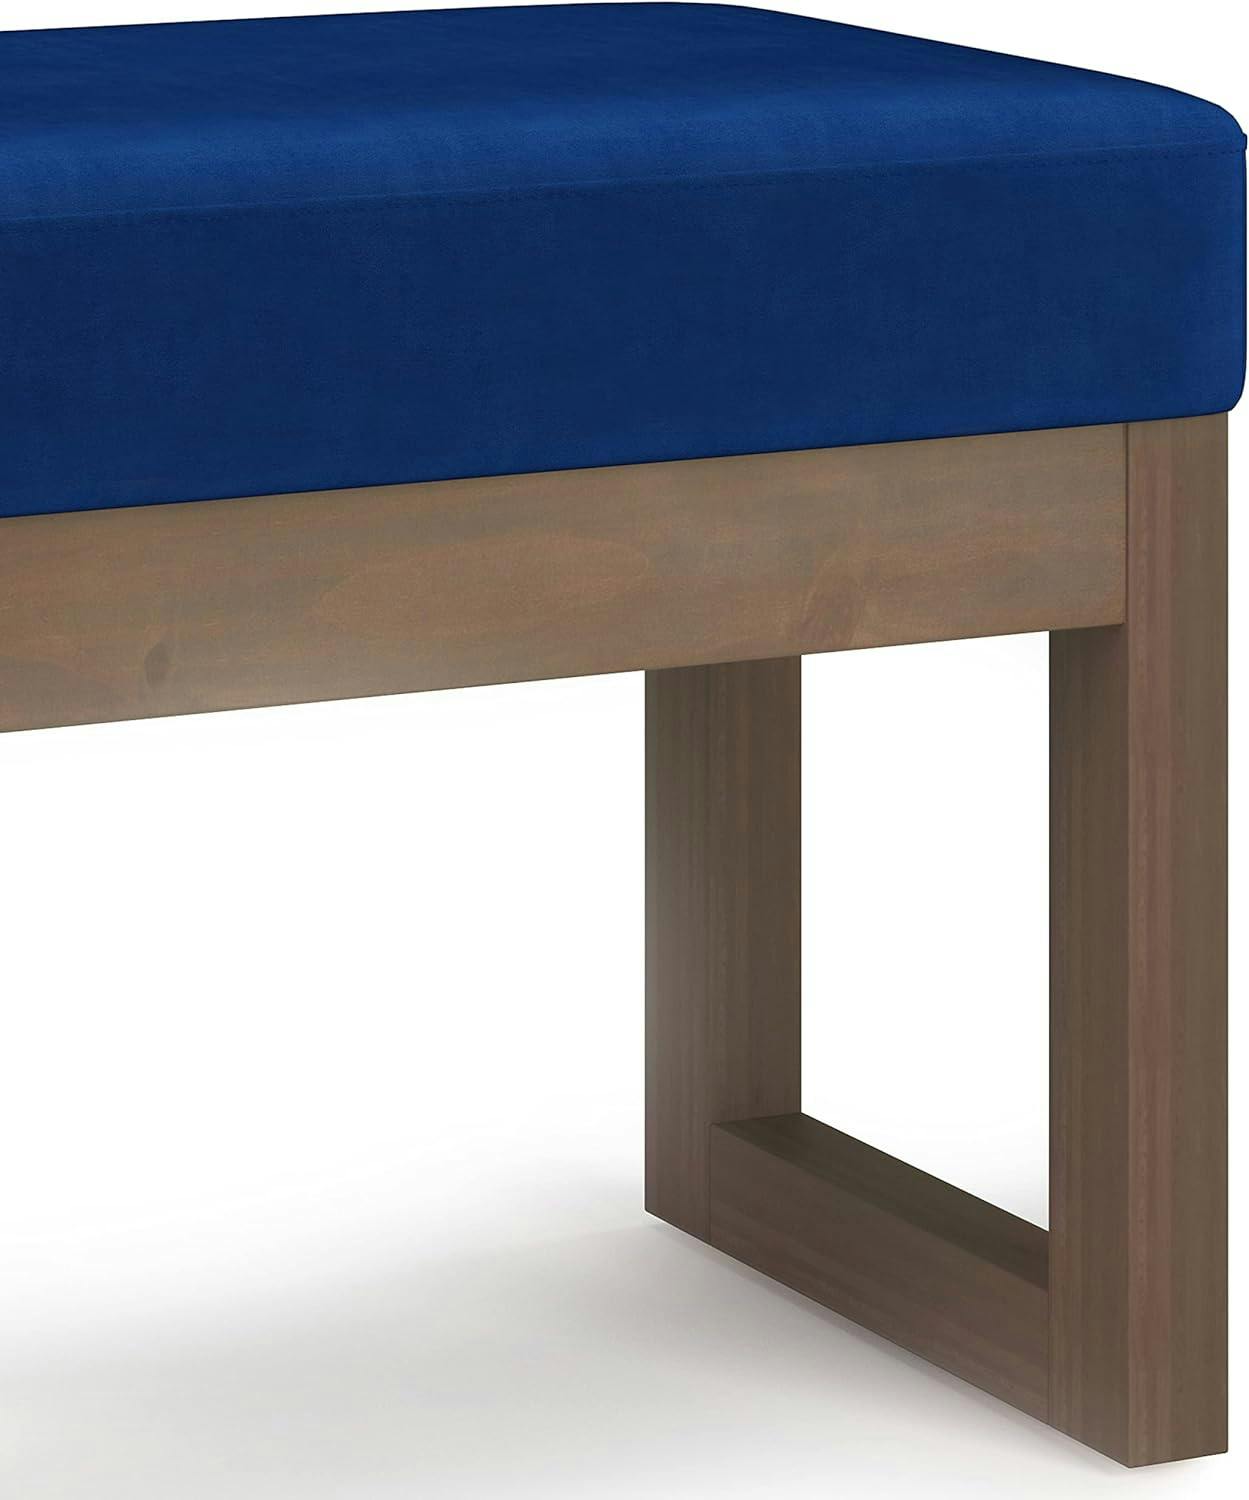 Milltown 26-inch Sleek Blue Velvet Contemporary Footstool Ottoman